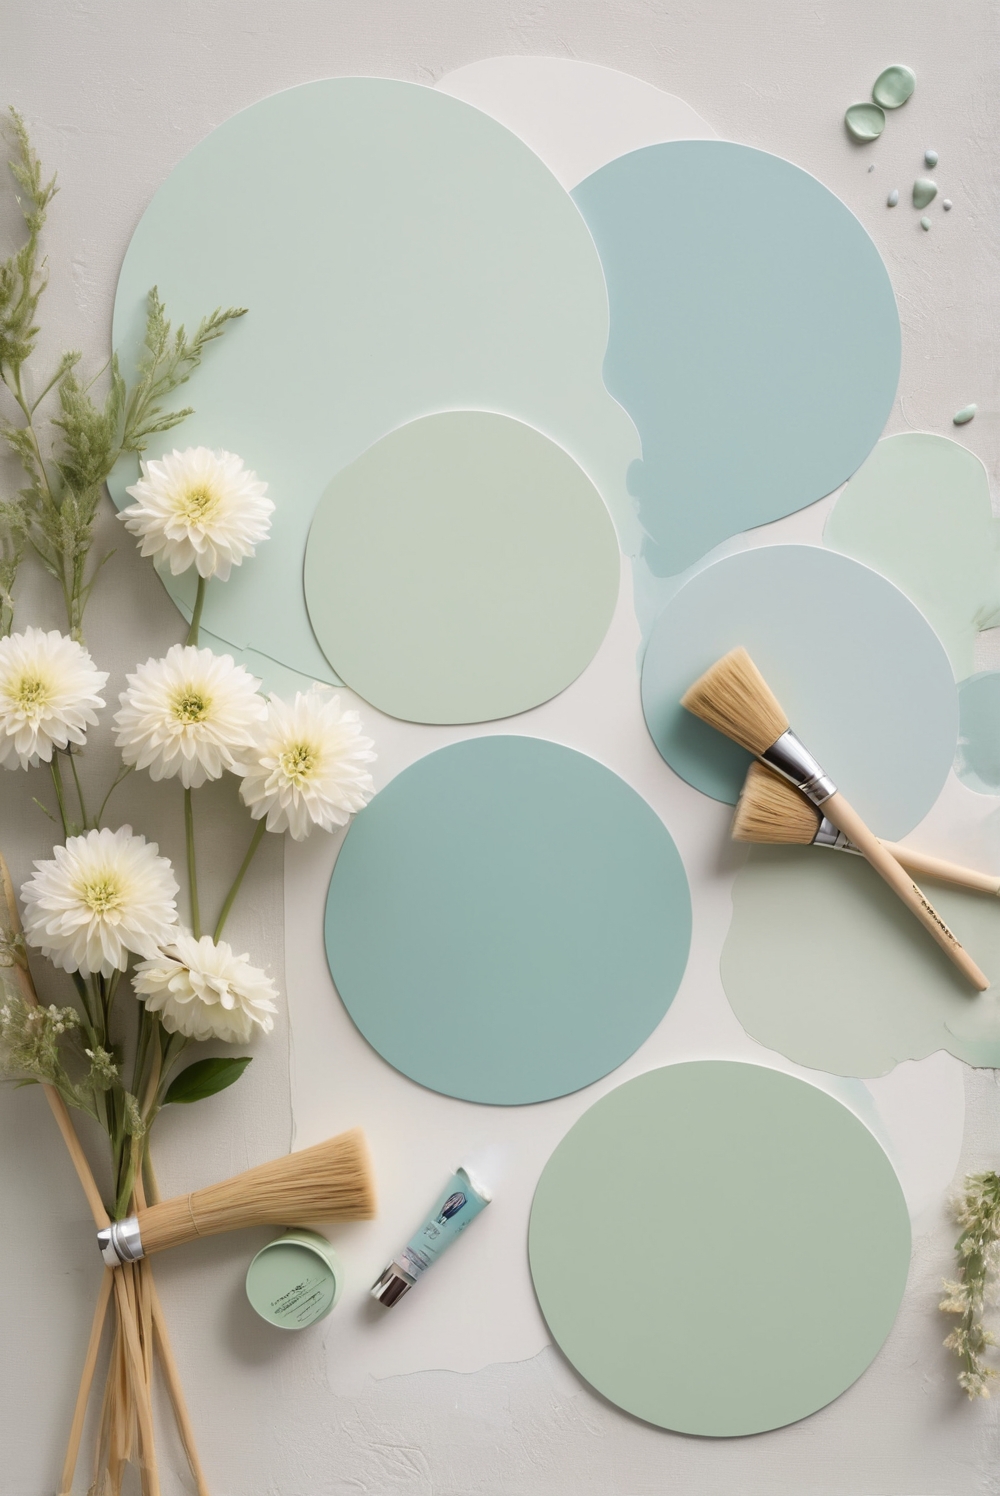 Seafoam Green paint, Amethyst wall color, interior design services, room color inspiration, home decor trends, paint color palette, room design ideas